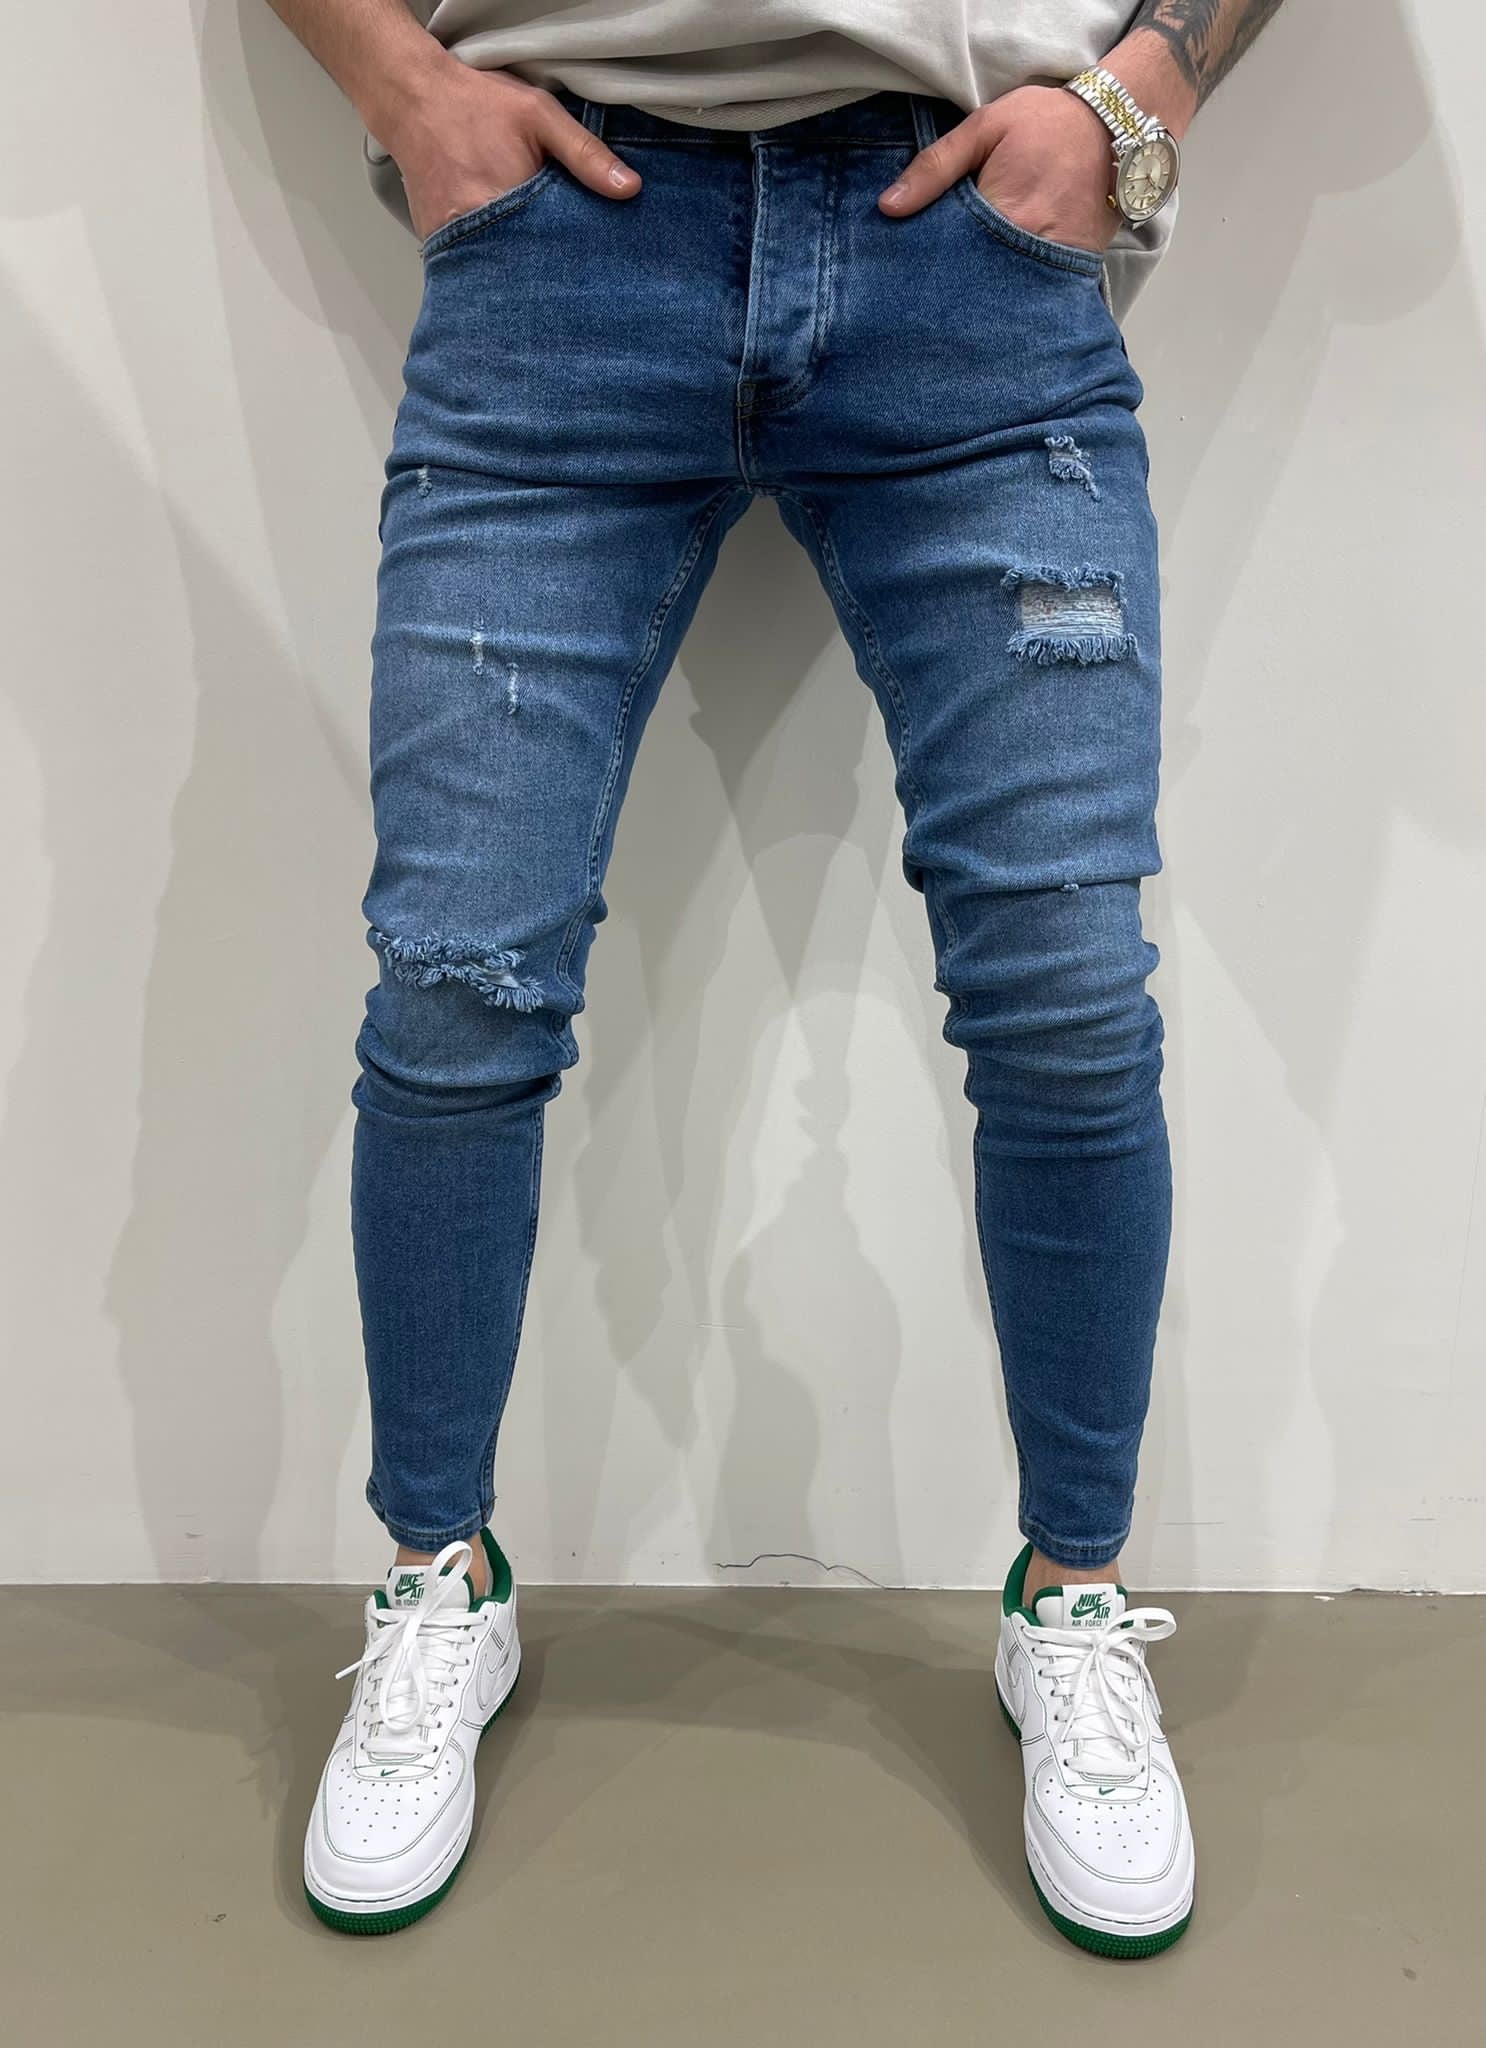 Kenzarro - Jeans bleu skinny homme fashion